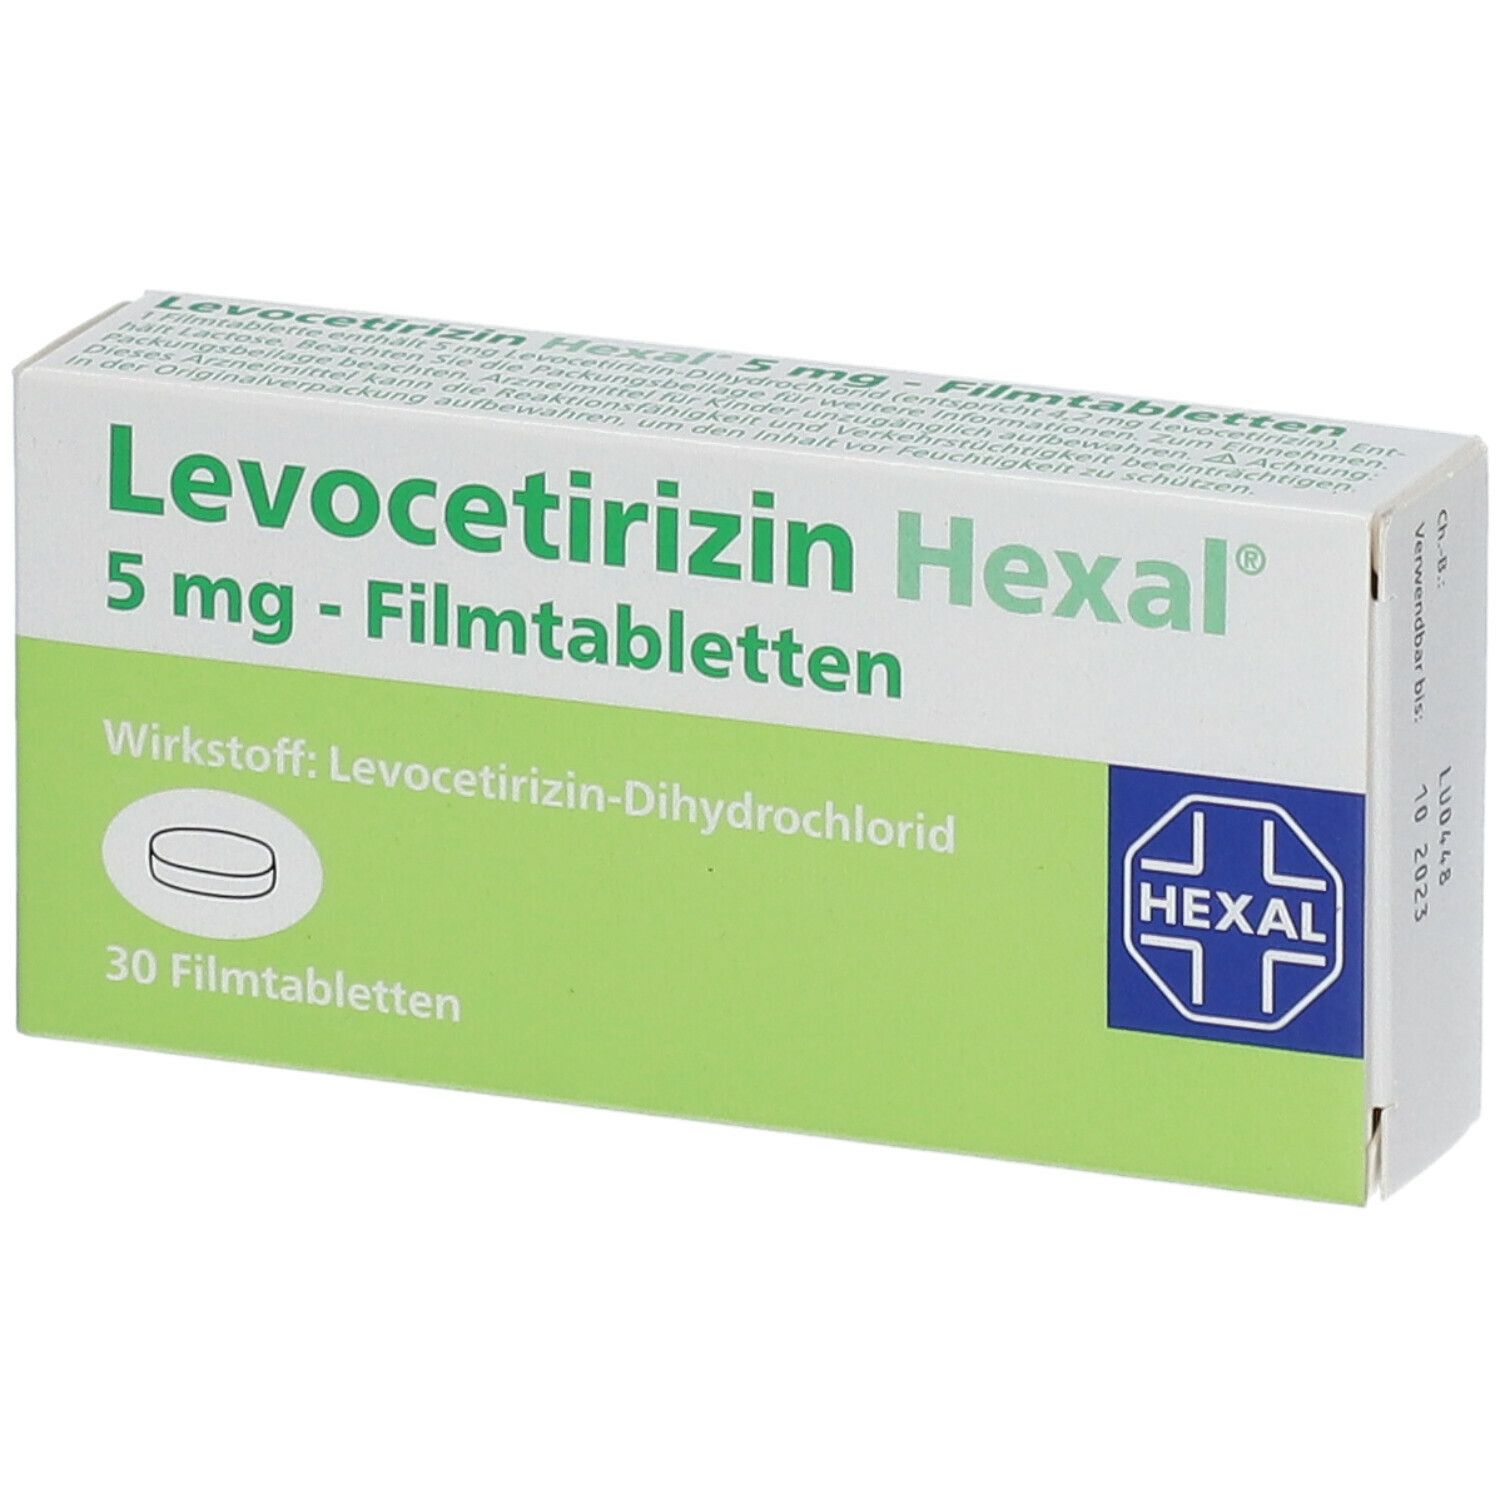 Levocetririzin Hexal® 5 mg